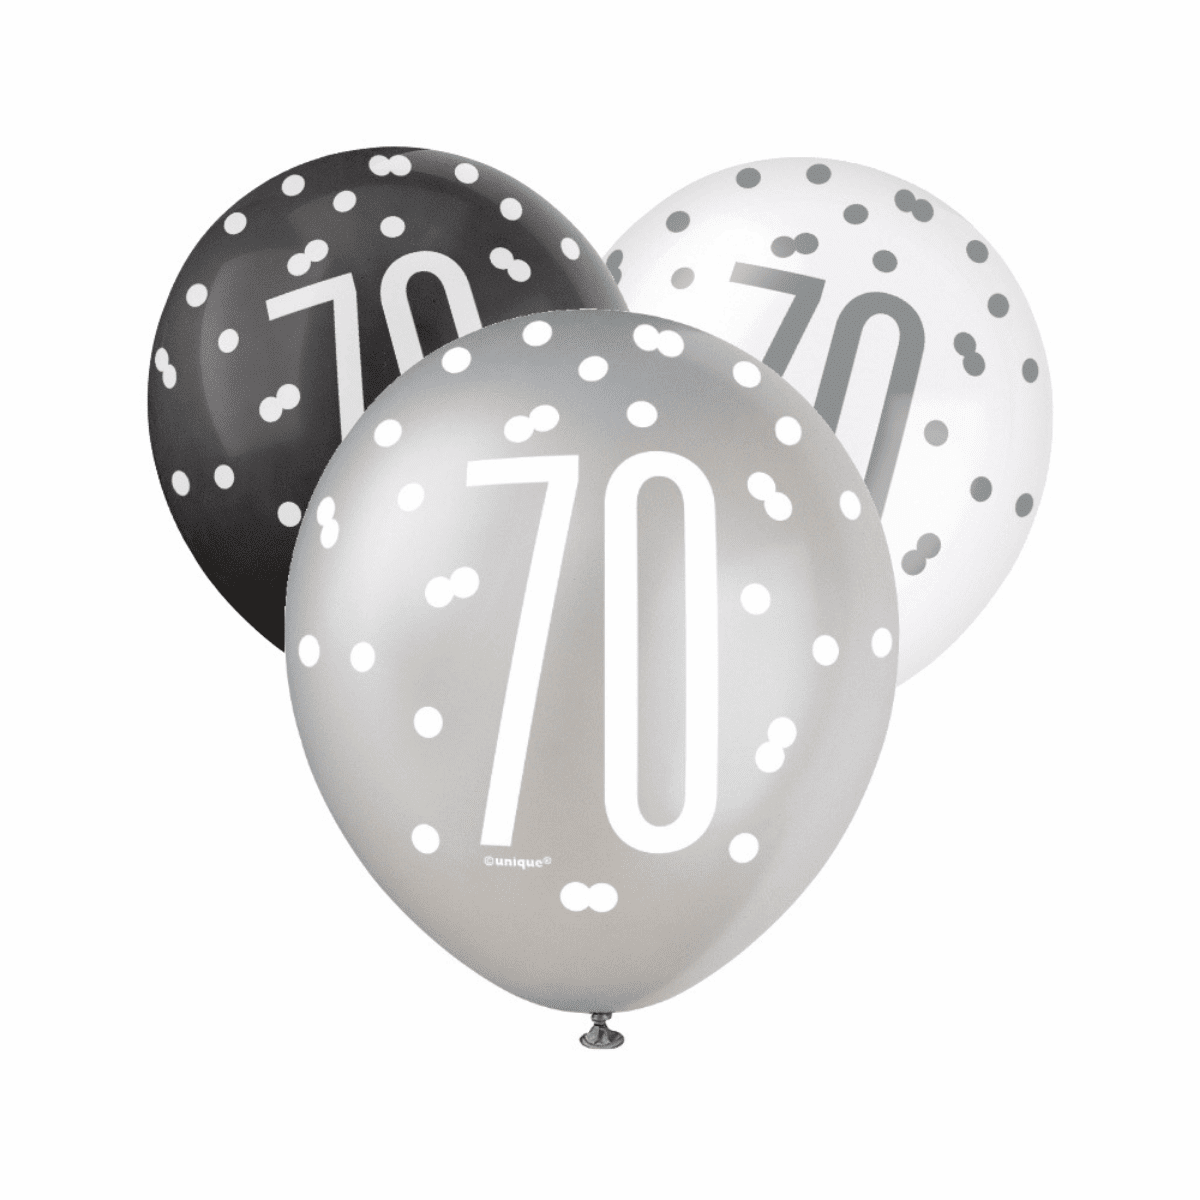 Black, Silver, & White Latex Balloons 70th